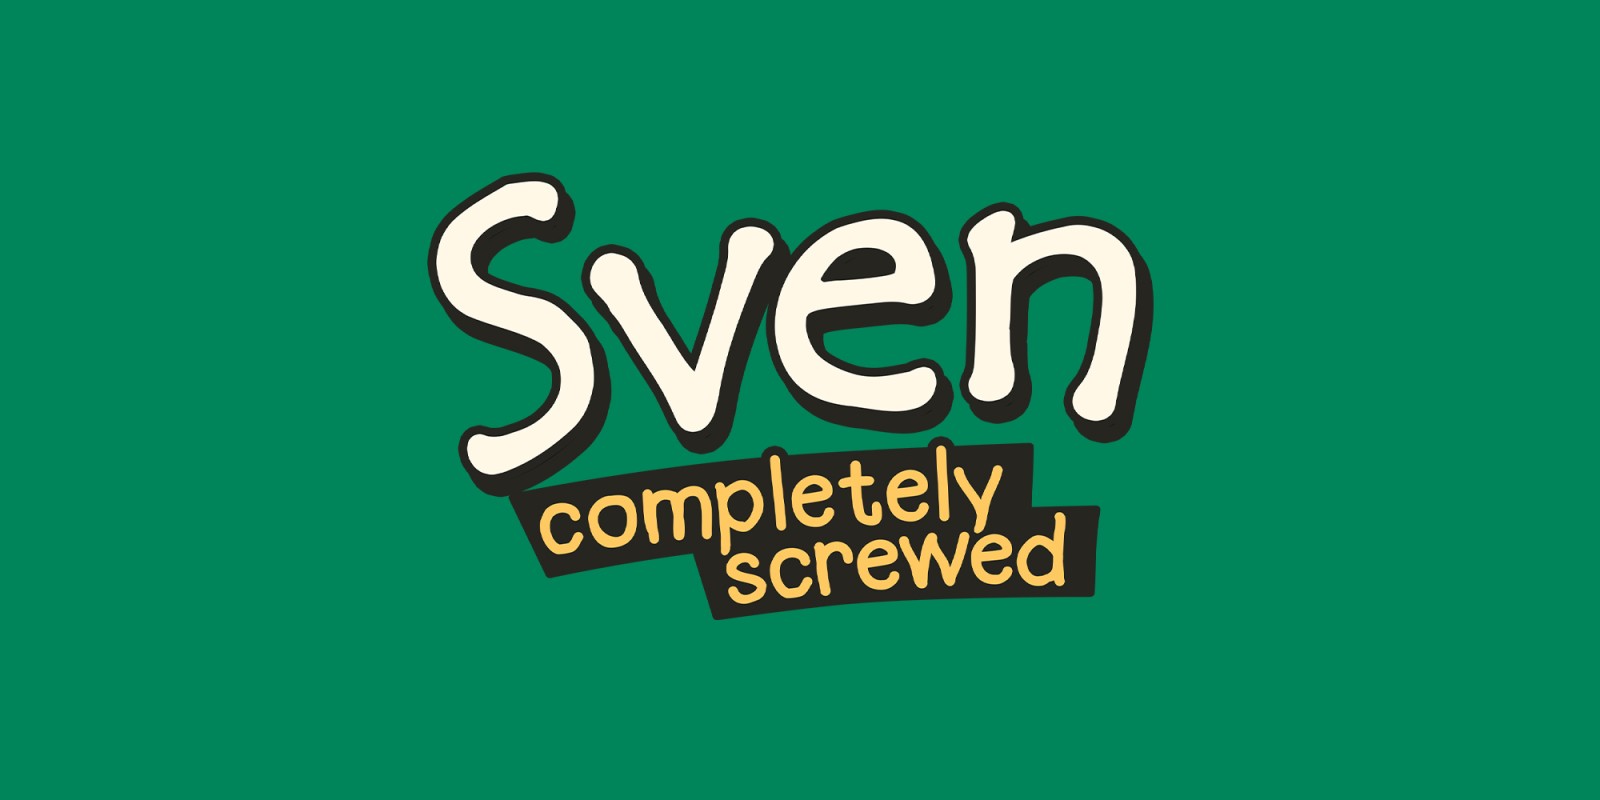 Sven – completely screwed